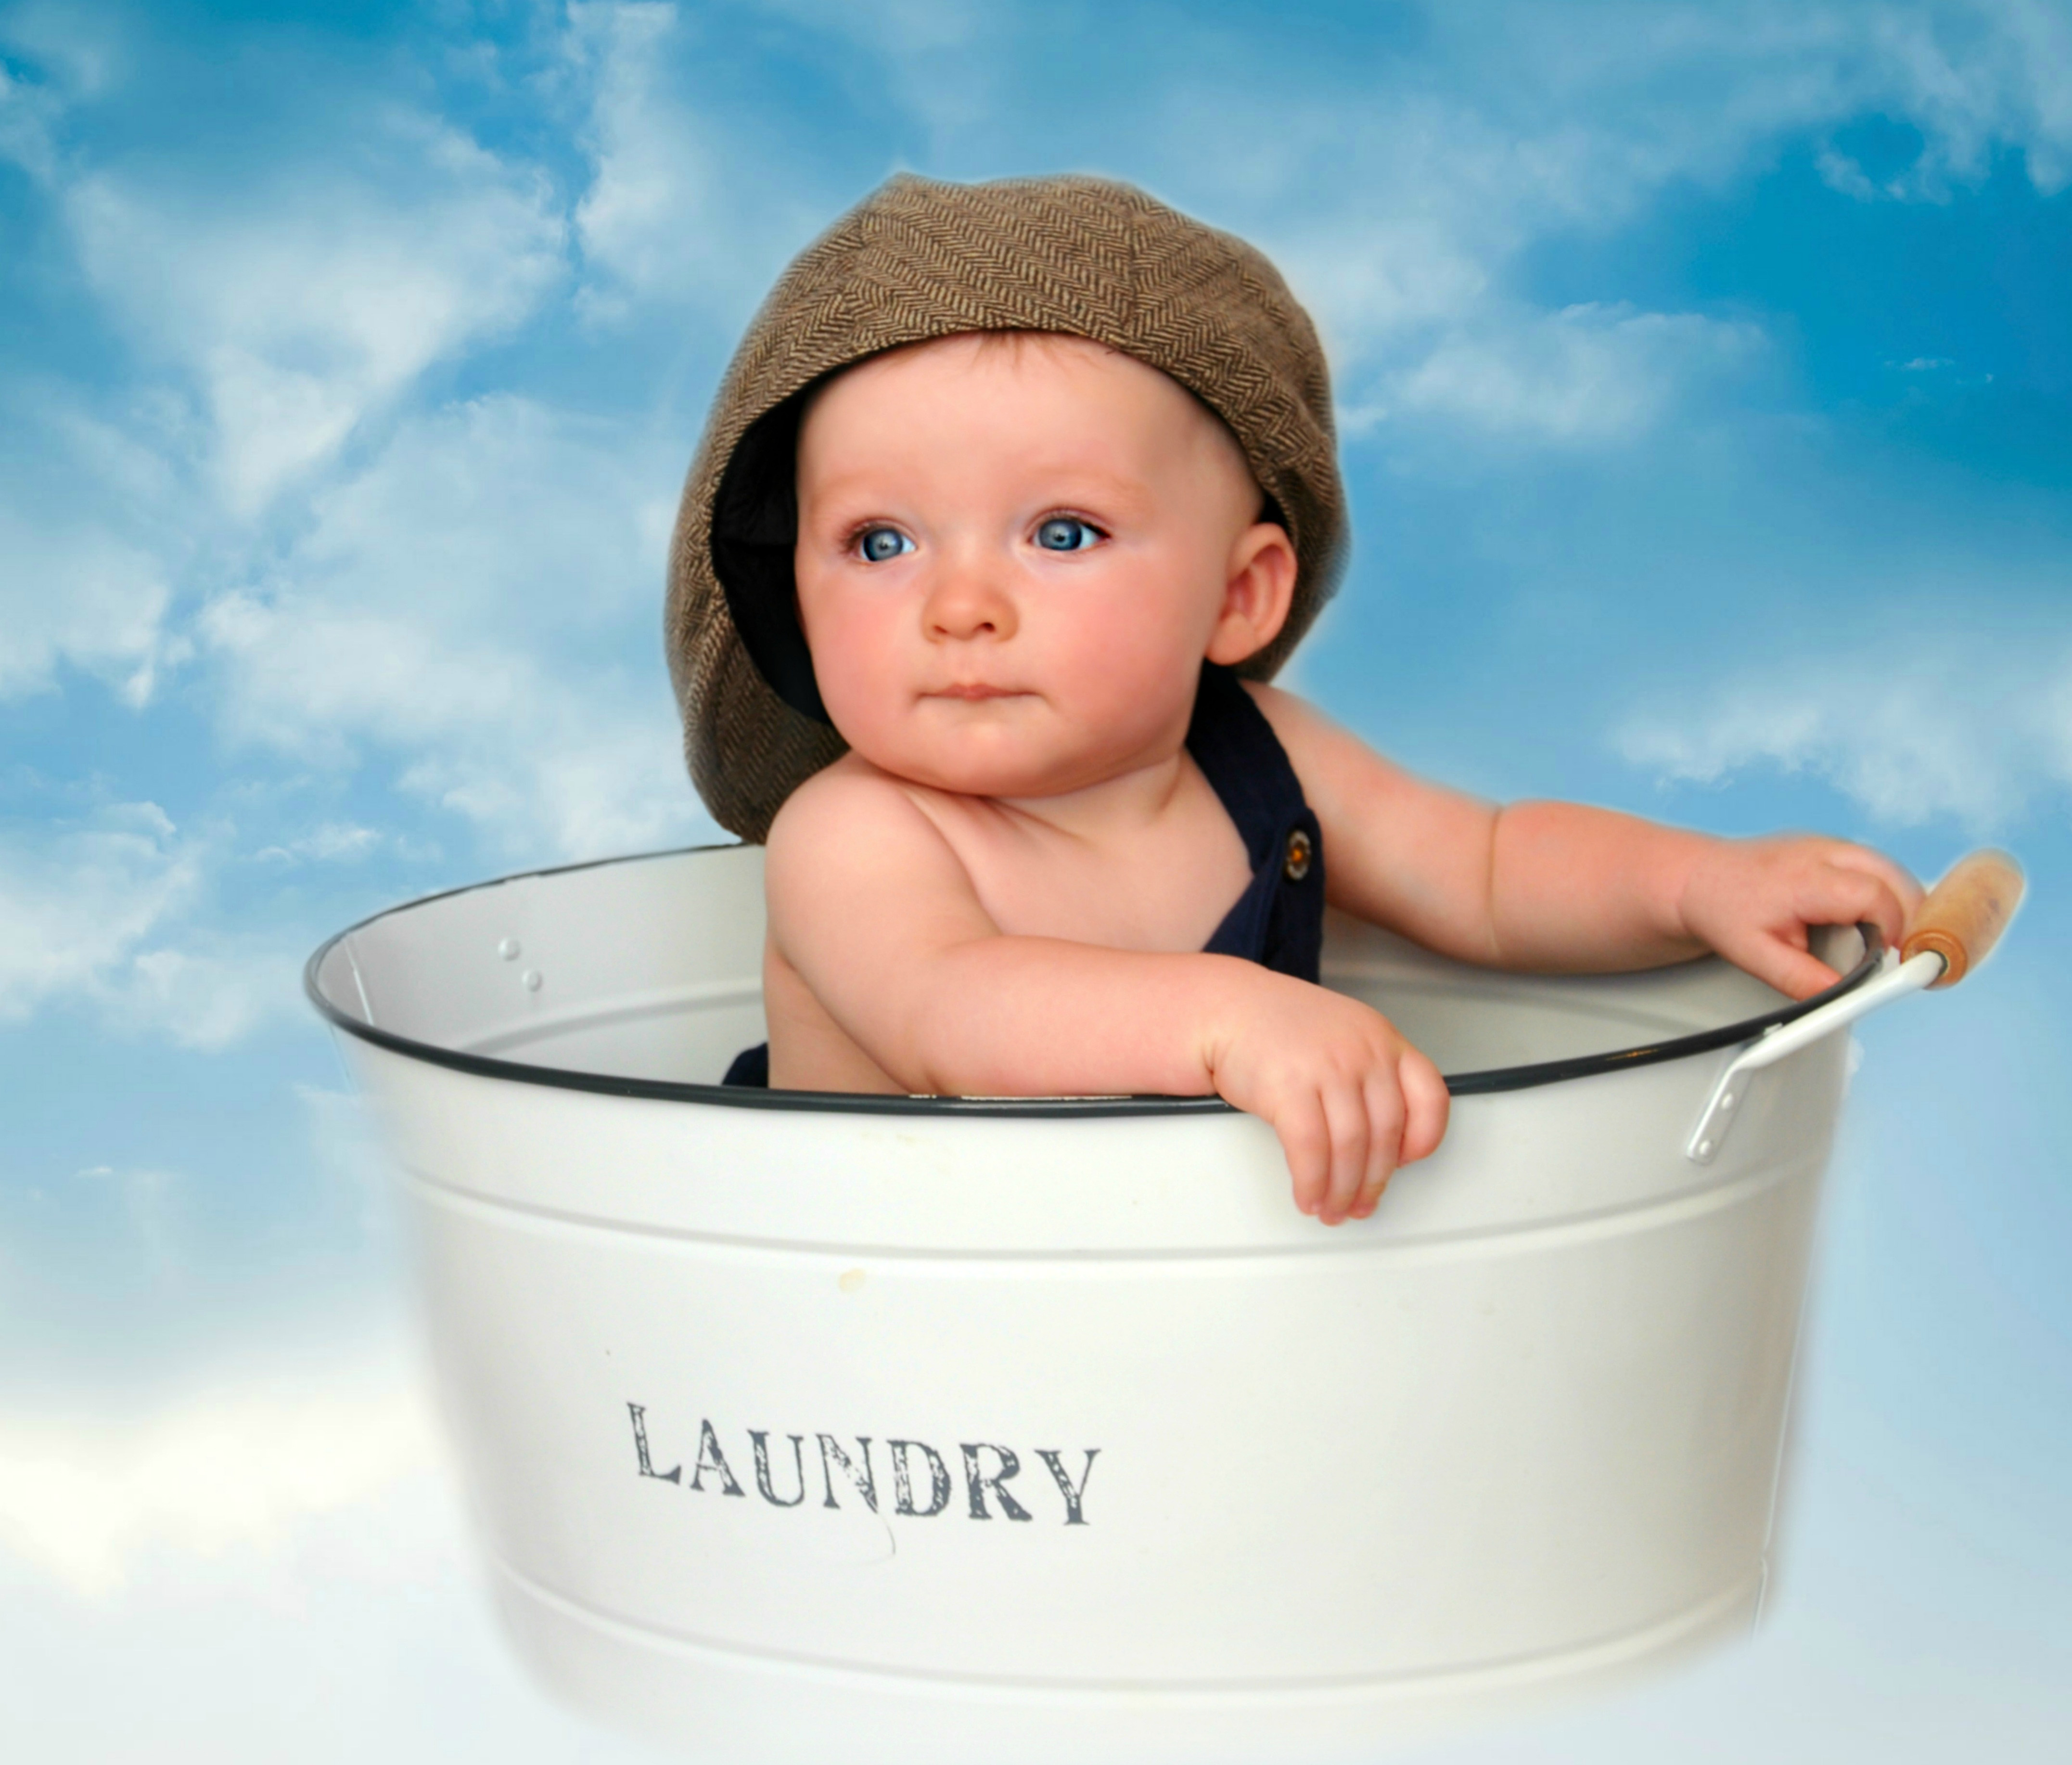 Baby in a laundry bucket image - Free stock photo - Public Domain